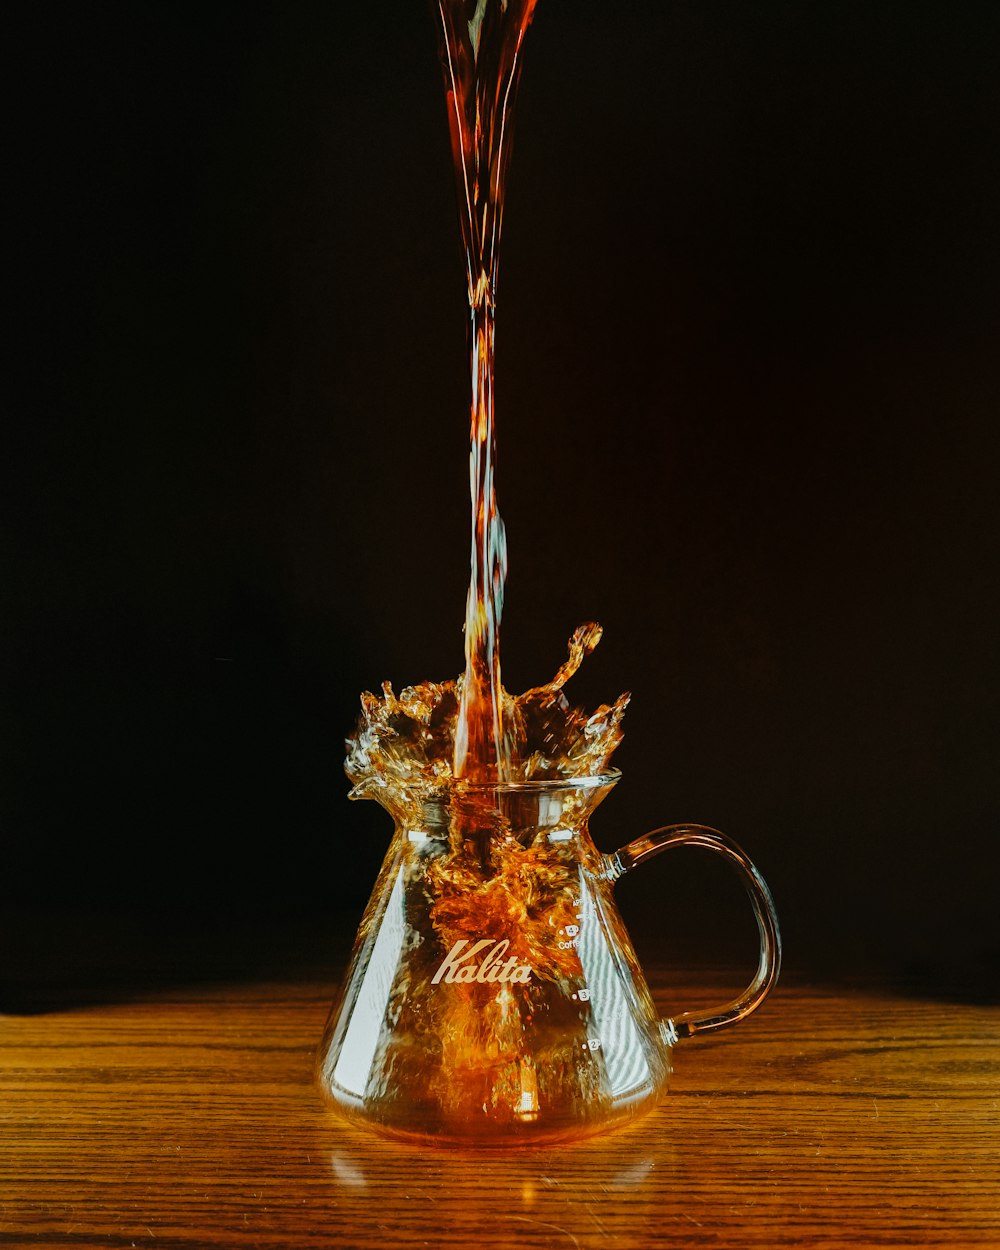 clear glass mug with red liquid